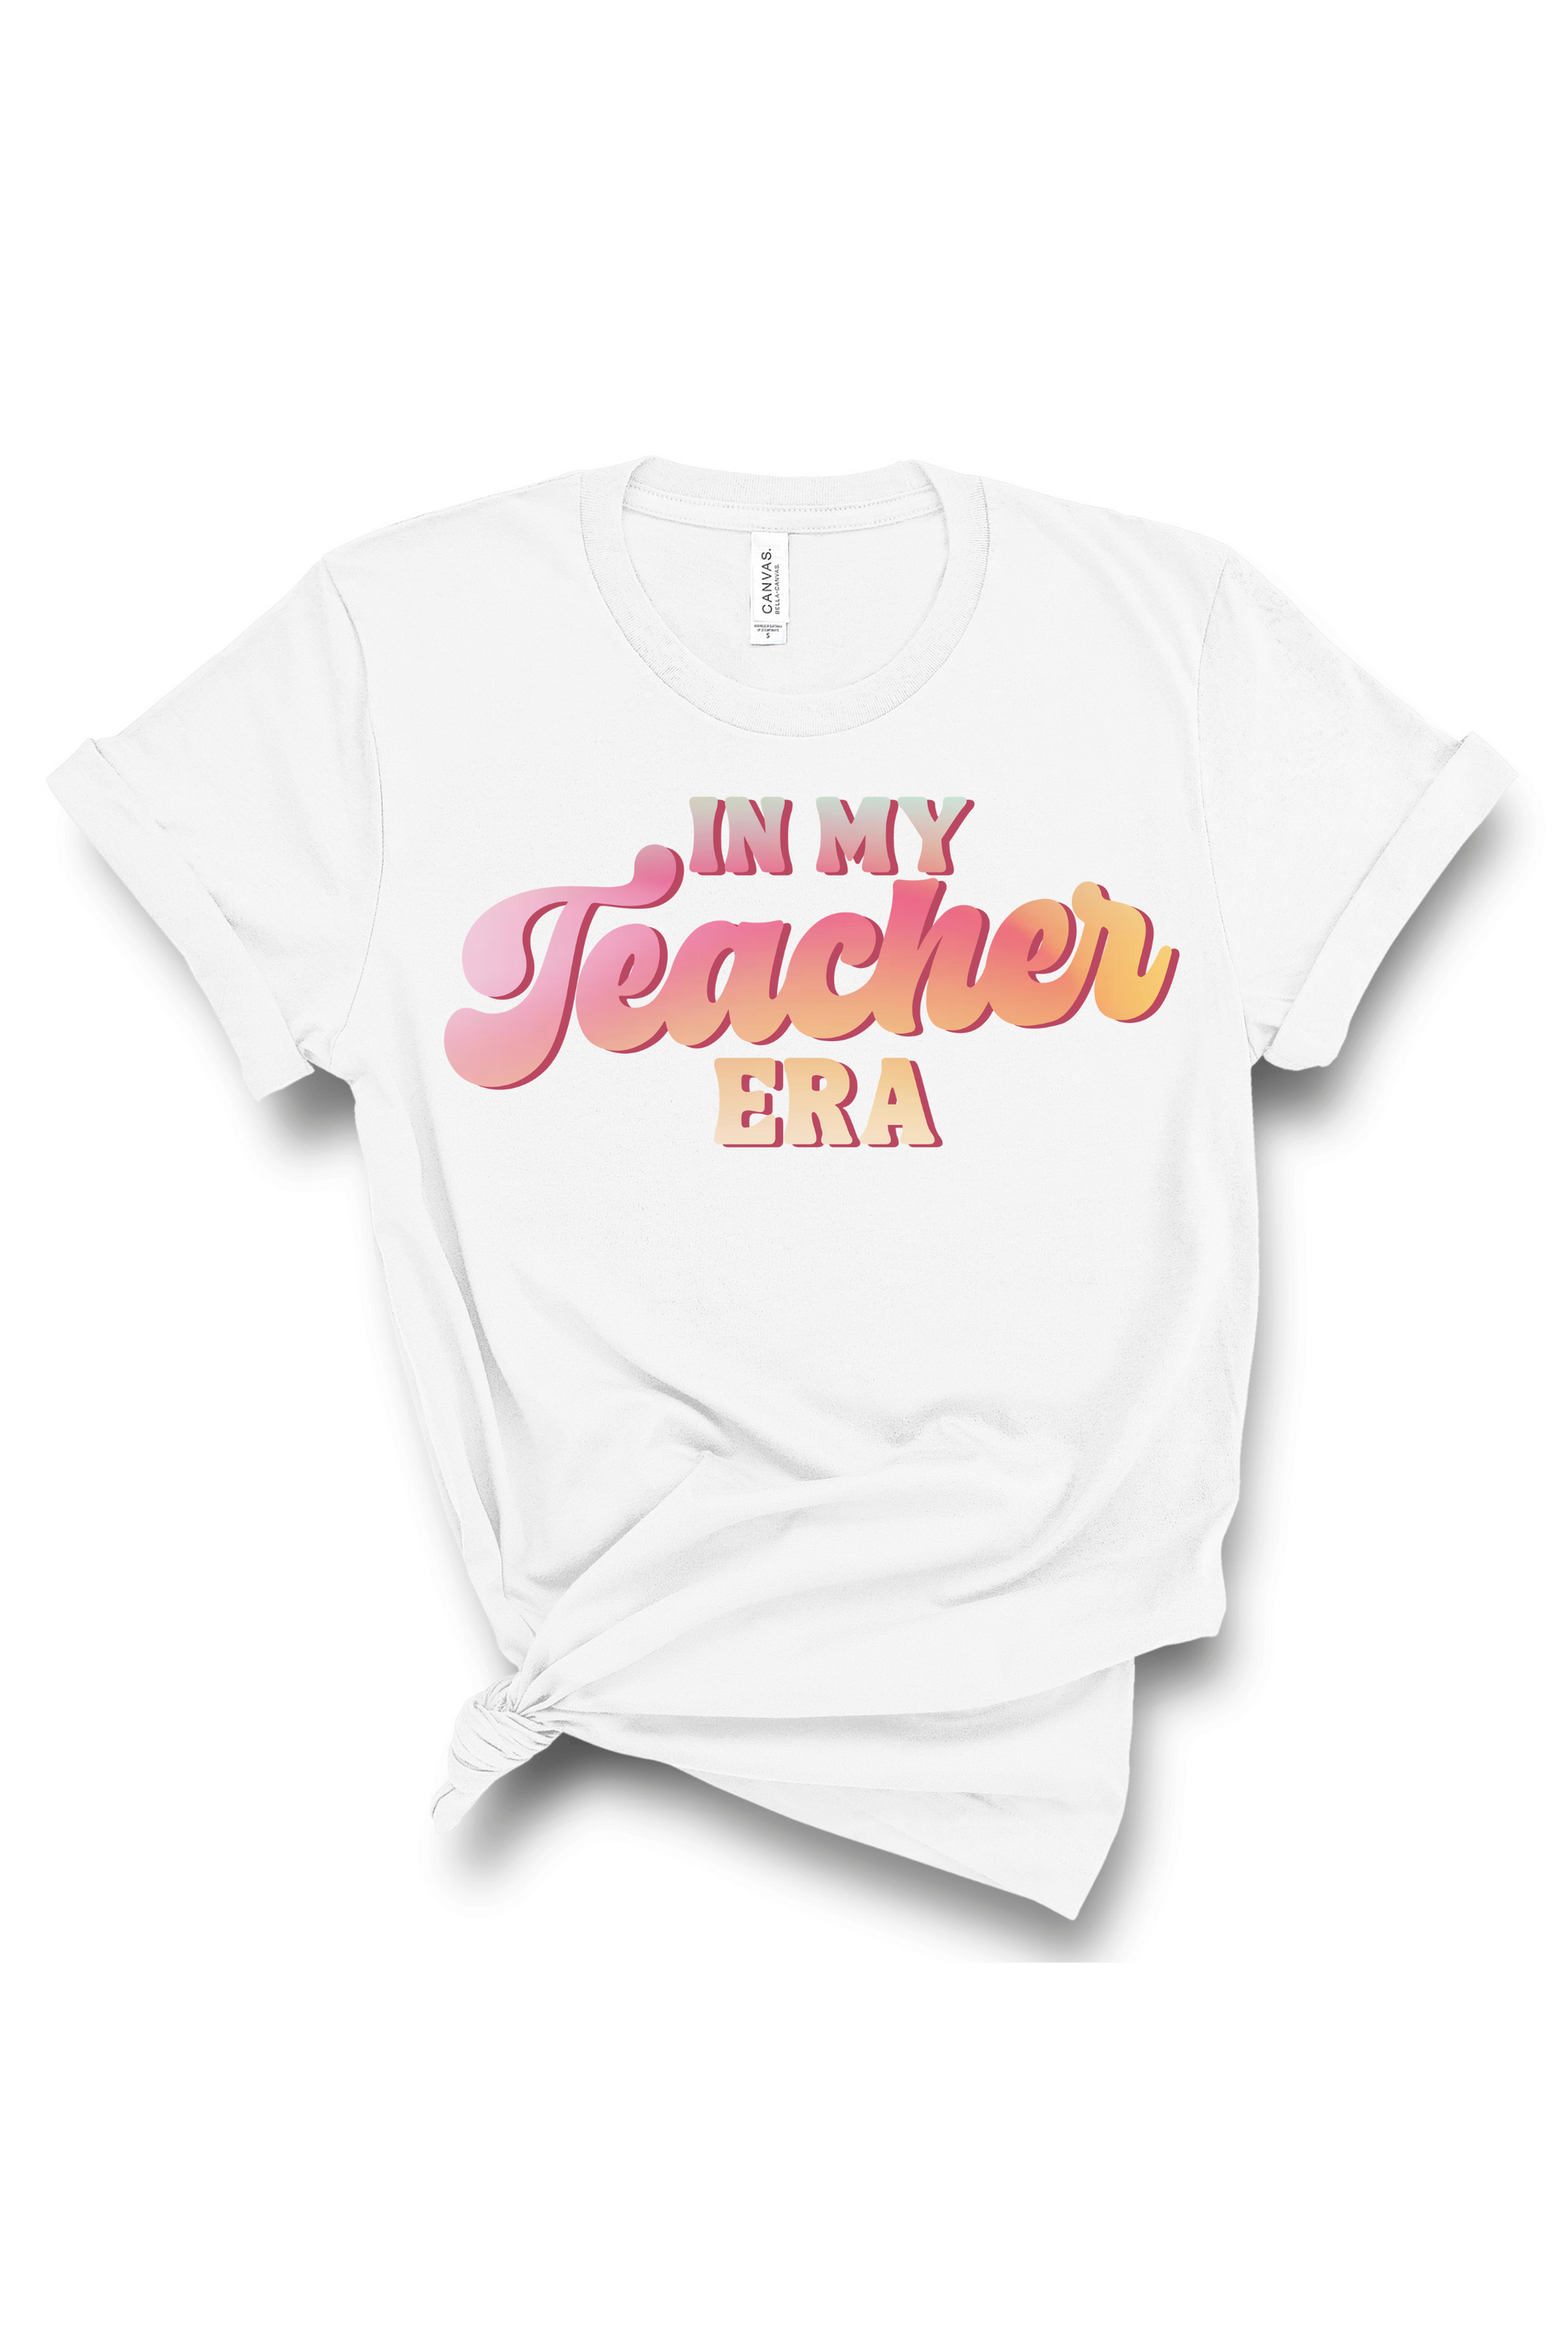 Teacher Era | Adult Tee-Adult Tee-Sister Shirts-Sister Shirts, Cute & Custom Tees for Mama & Littles in Trussville, Alabama.